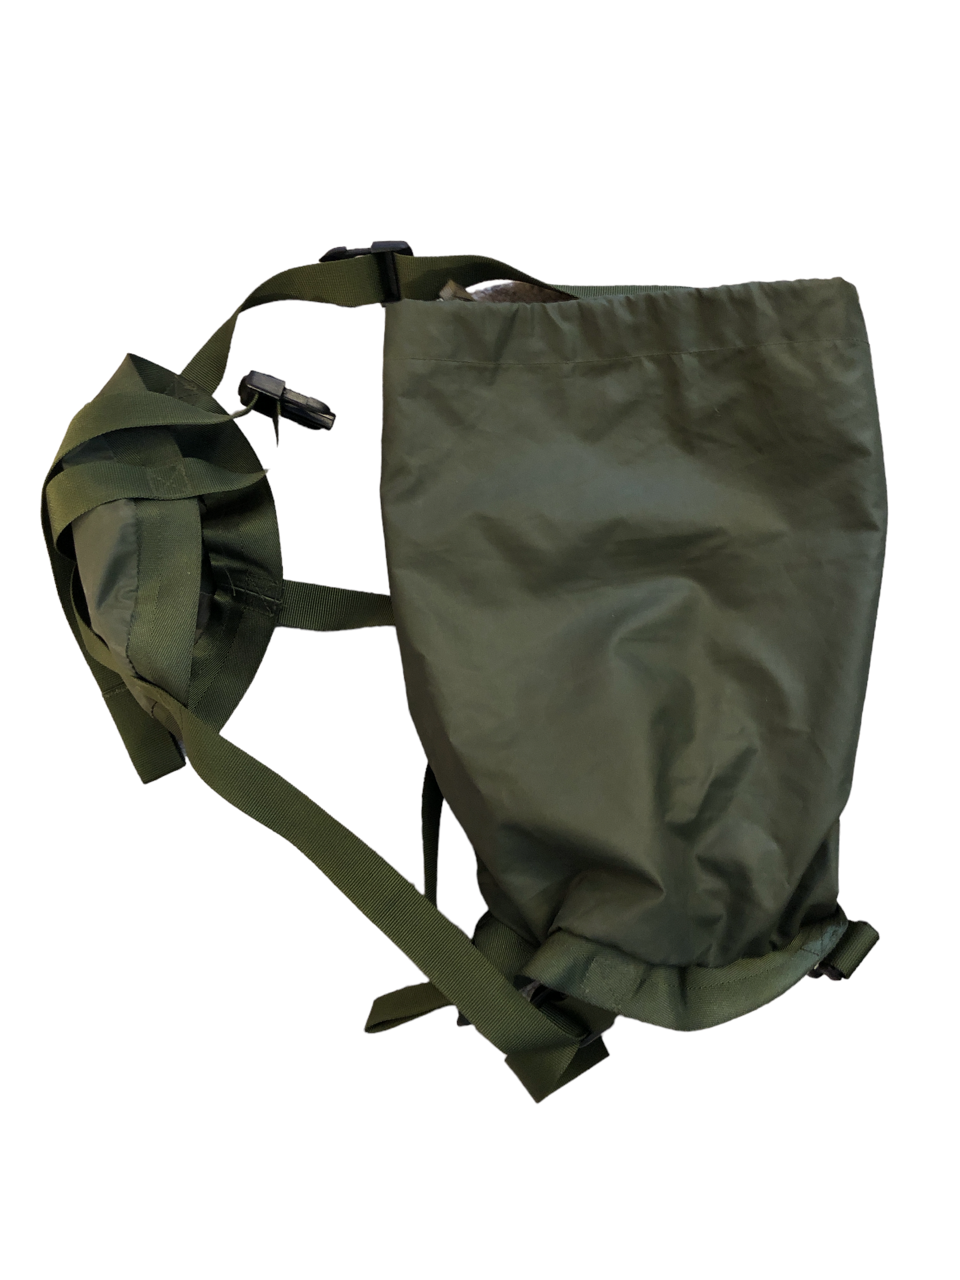 New Genuine British Army jungle warm weather sleeping bag stuff sack only